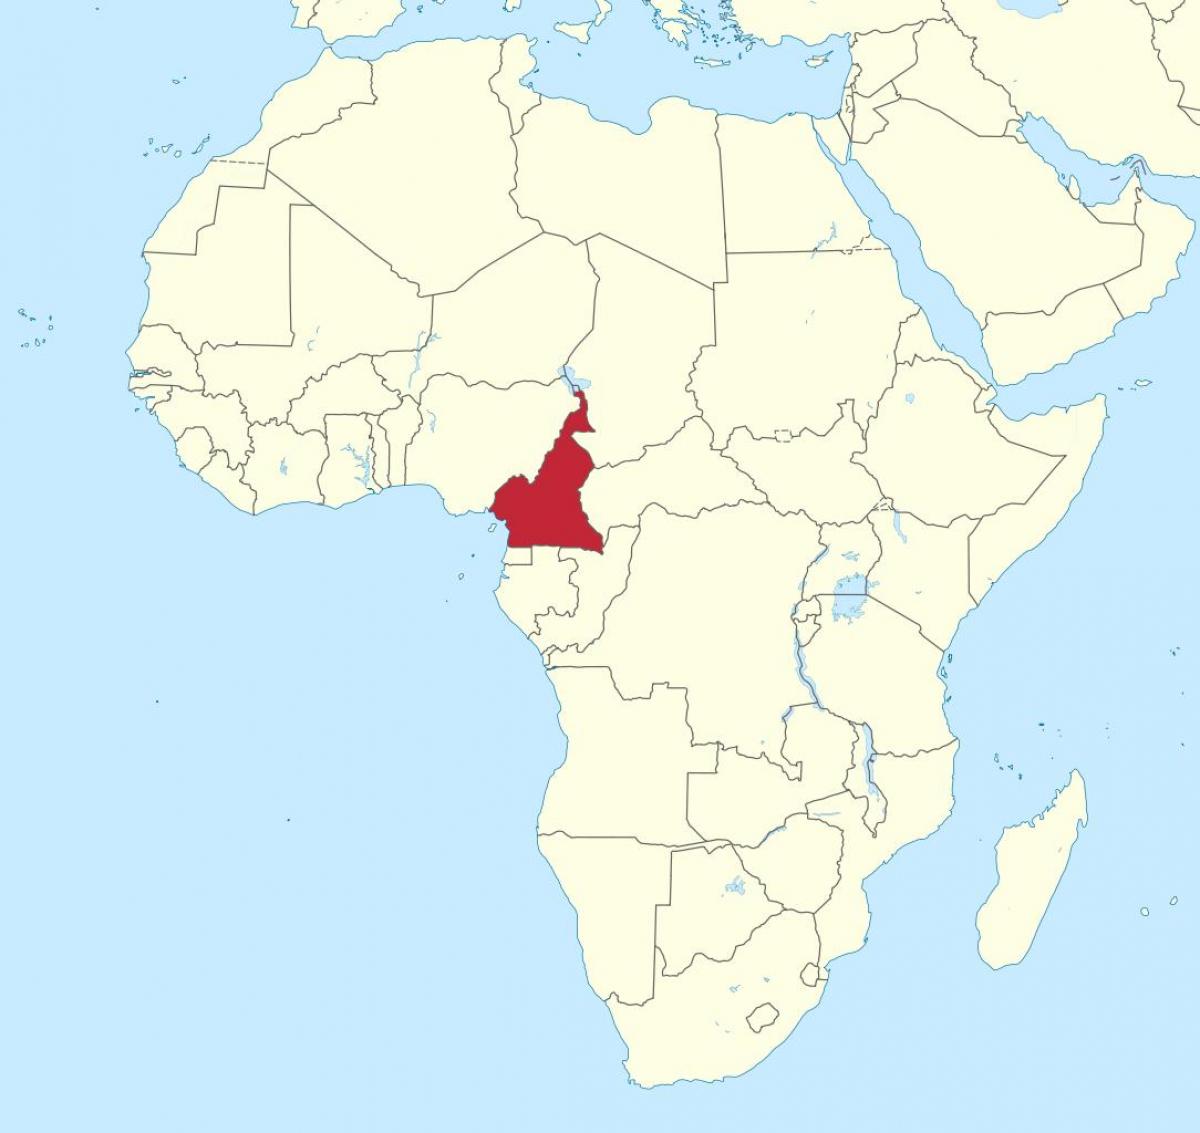 Mapa de Camerún, áfrica occidental